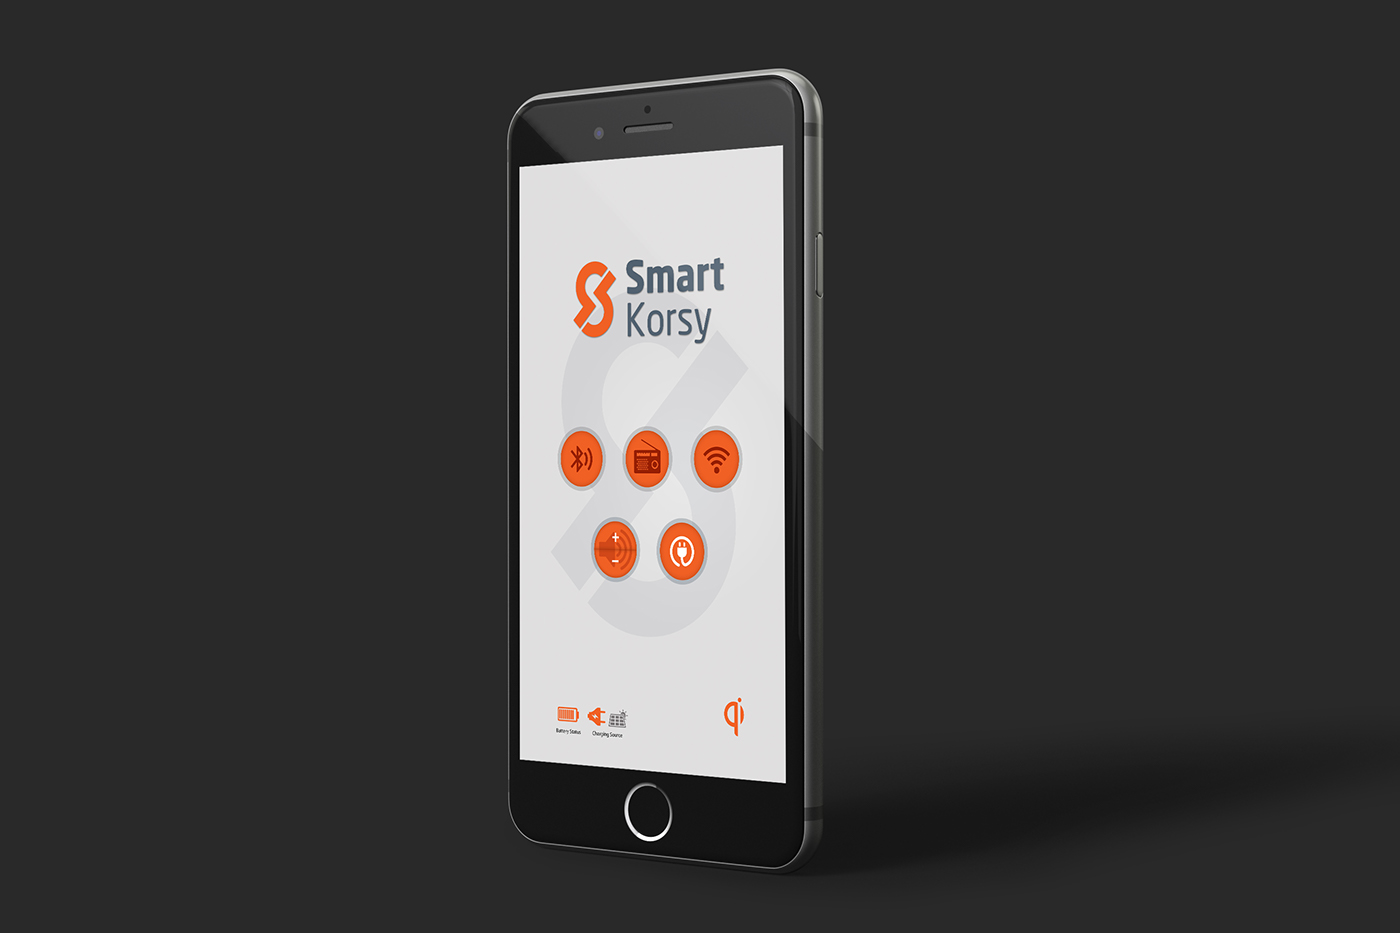 iPhone application development for #smartkorsy.